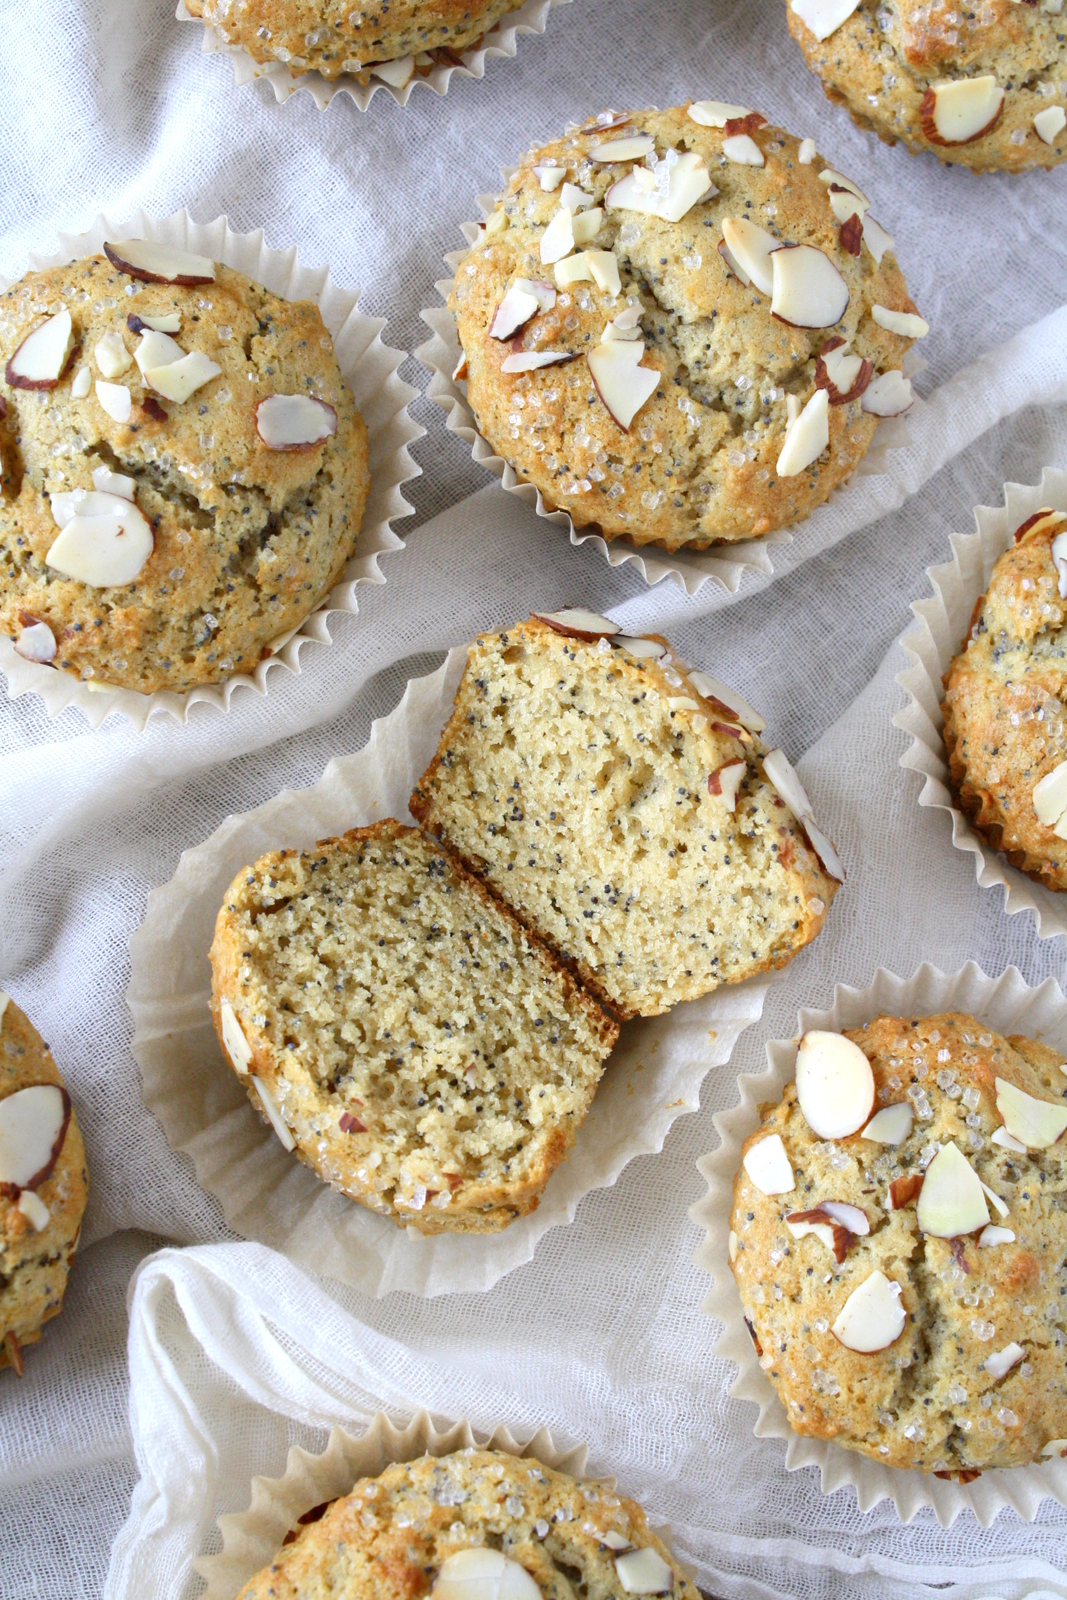 almond poppy seed muffins